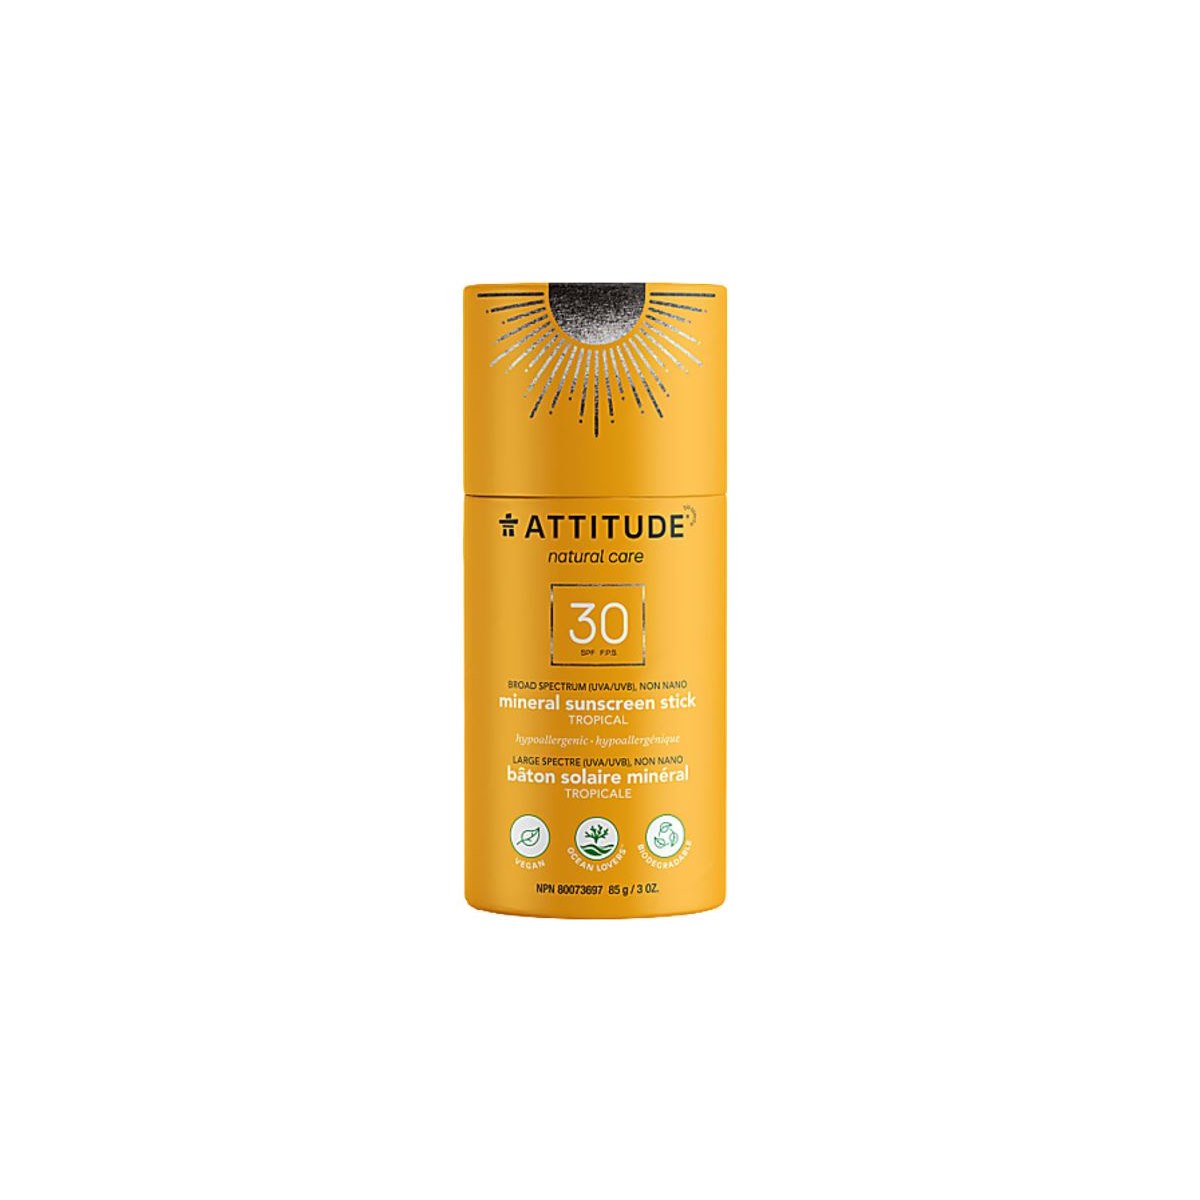 Attitude Sunscreen Stick SPF 30 - Tropical